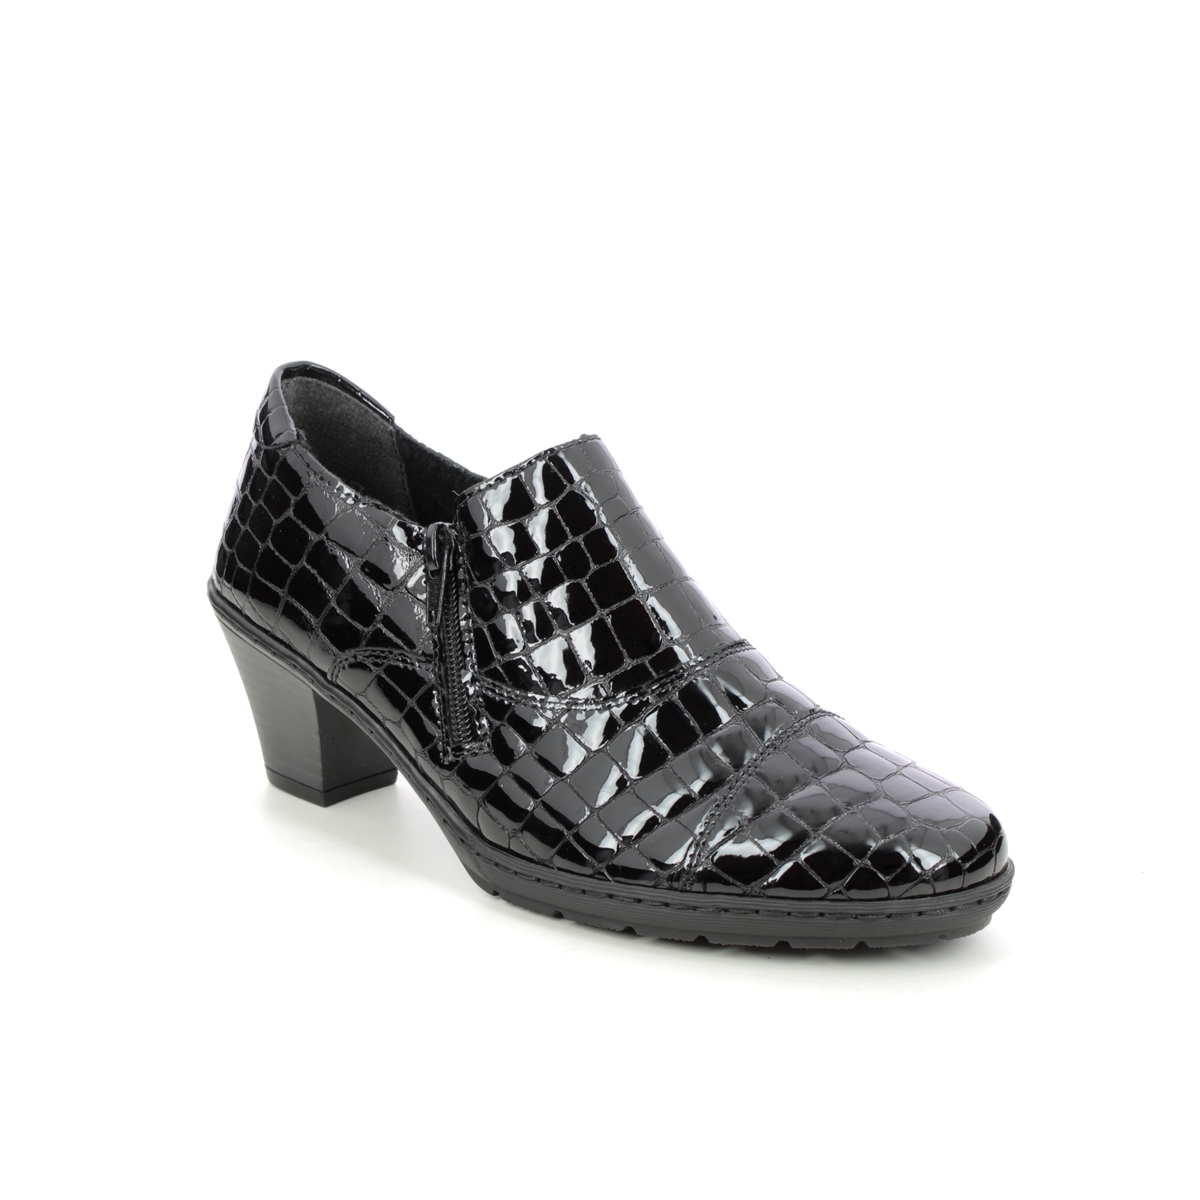 Rieker Addicap Black Croc Womens Shoe-Boots 57173-03 In Size 38 In Plain Black Croc Effect